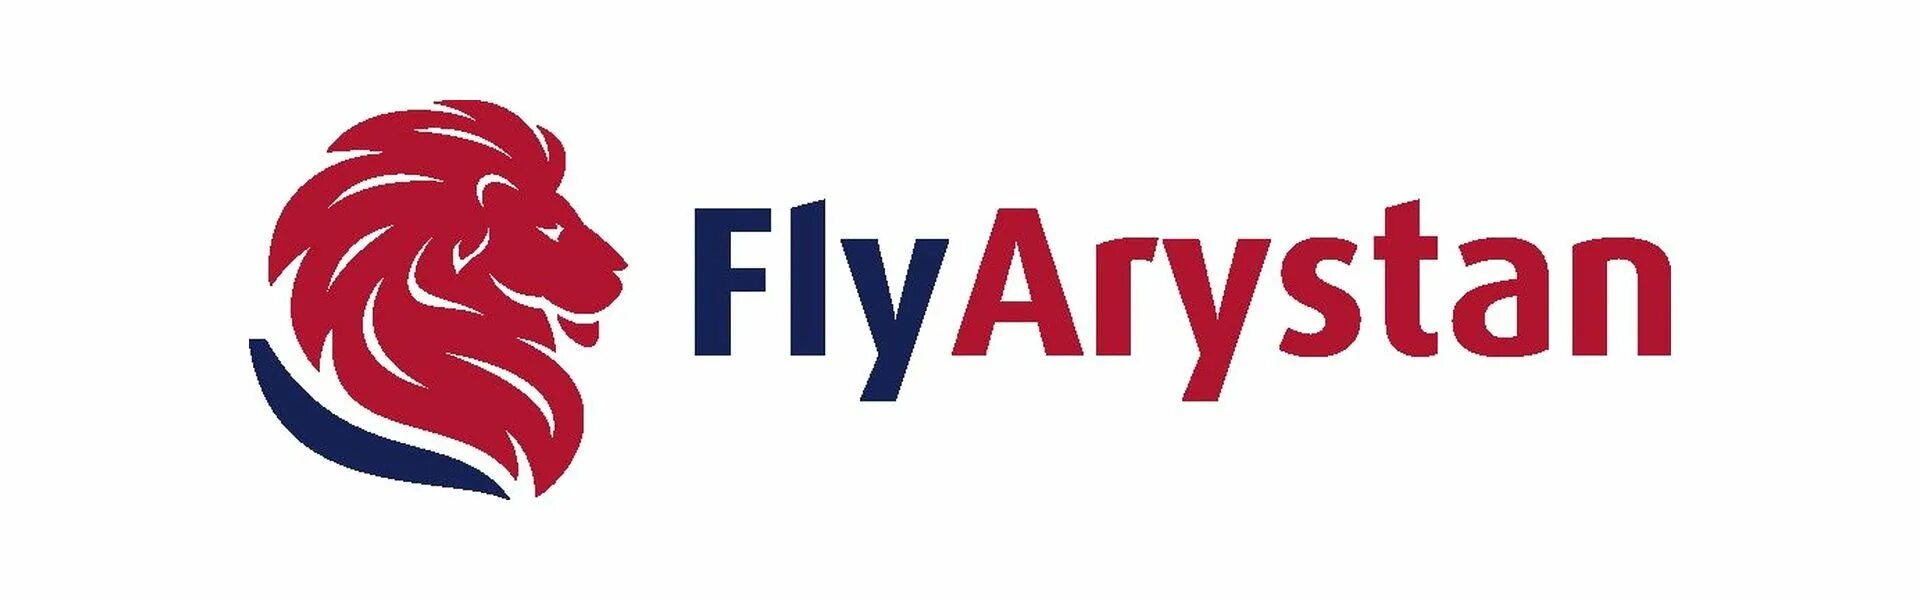 Flyarystan лого. Flyarystan авиакомпания. Fly Arystan logo. Авиалинии логотипы казахстанские.